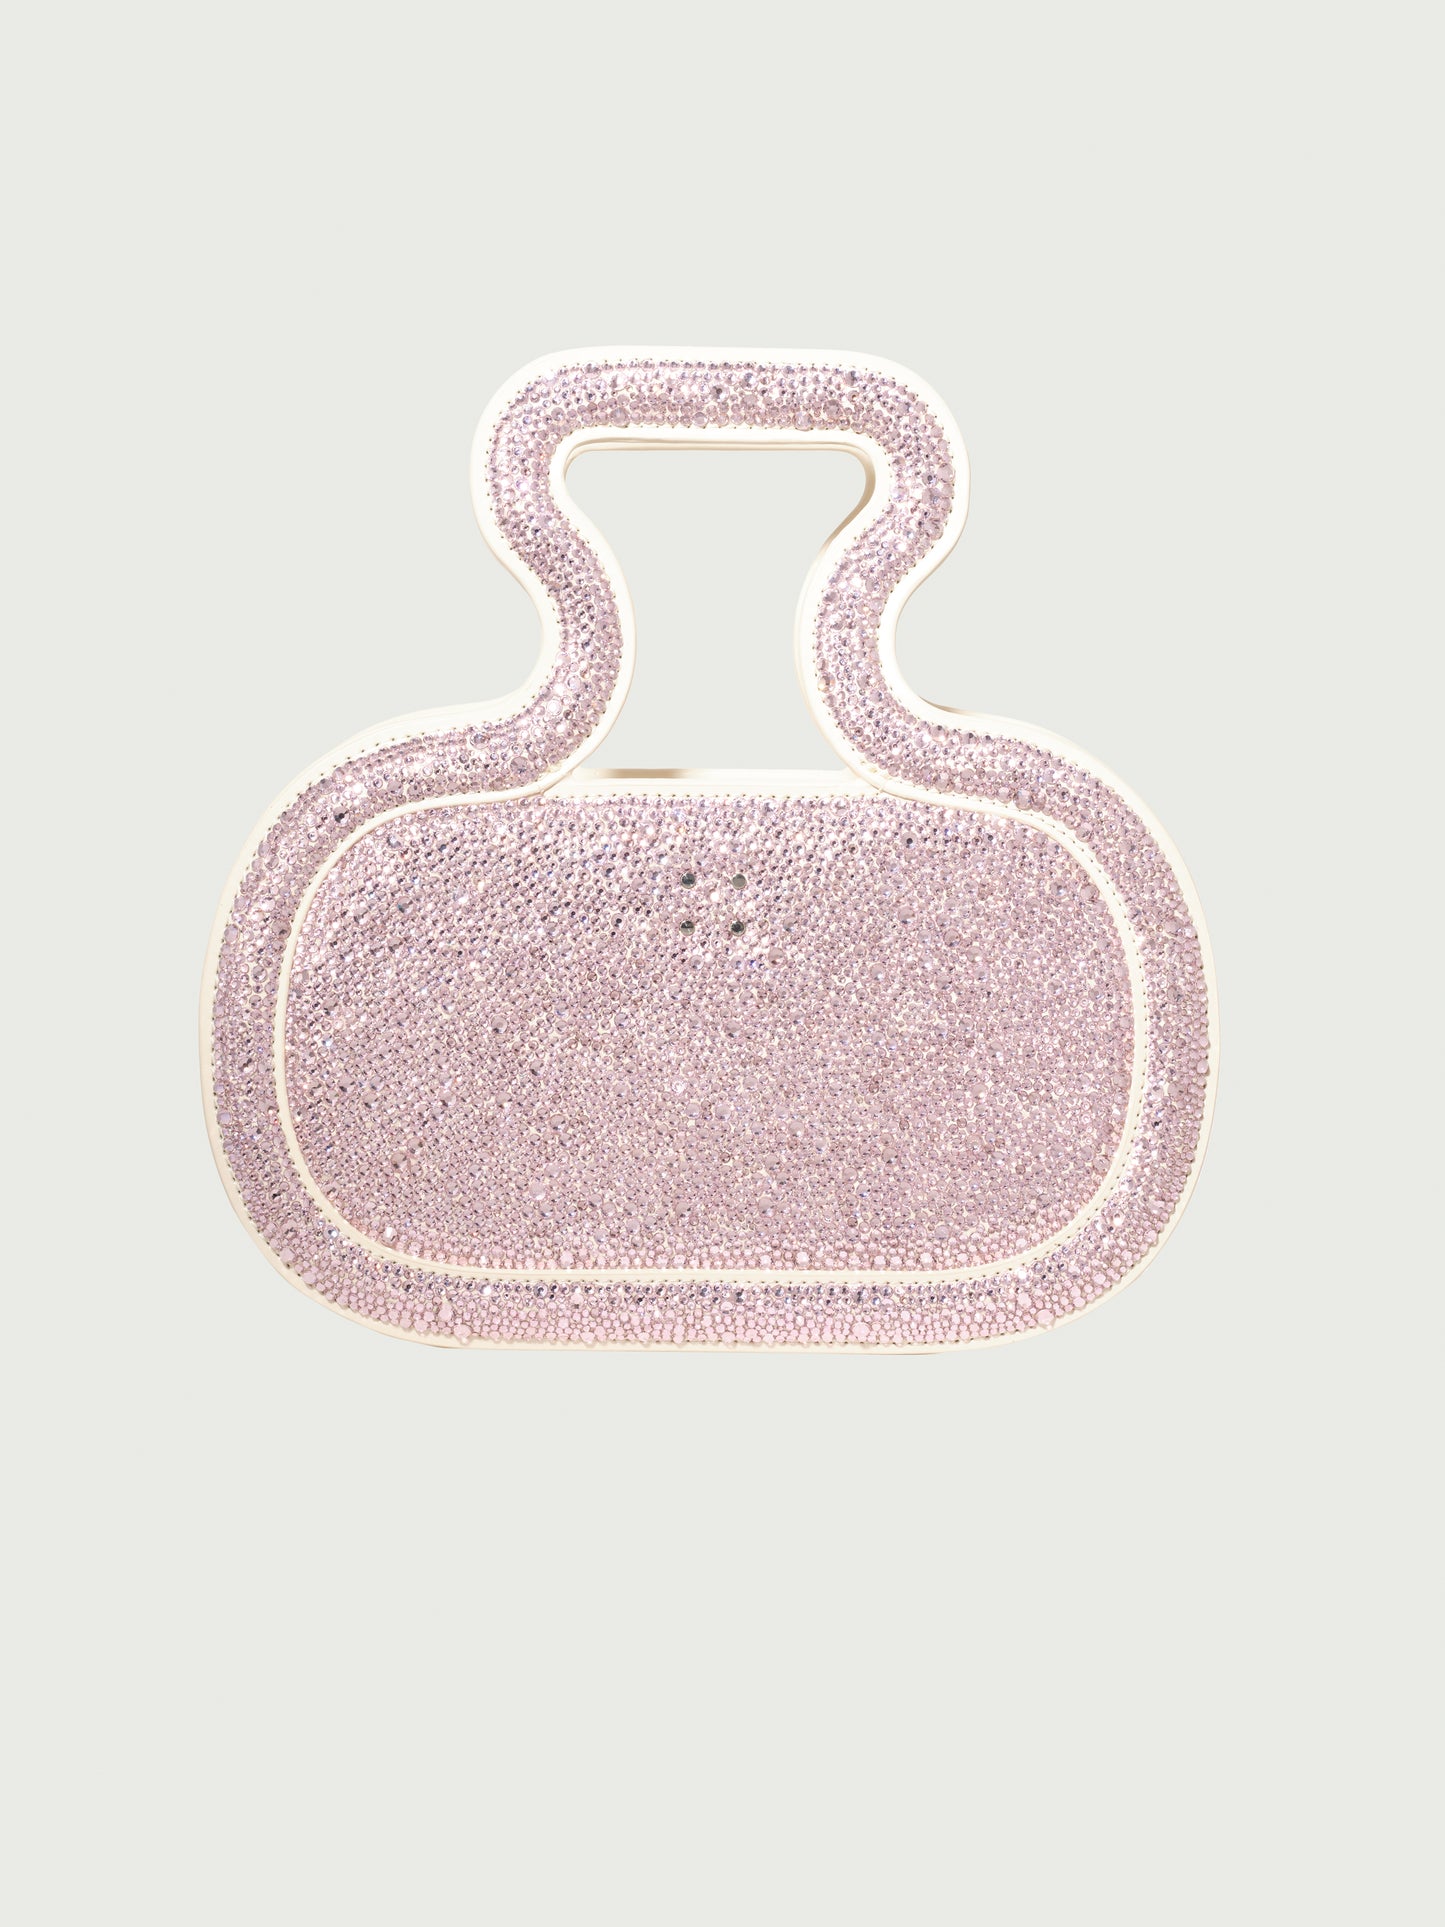 Silhoutte Bag in Baby Pink Swarovski crystals